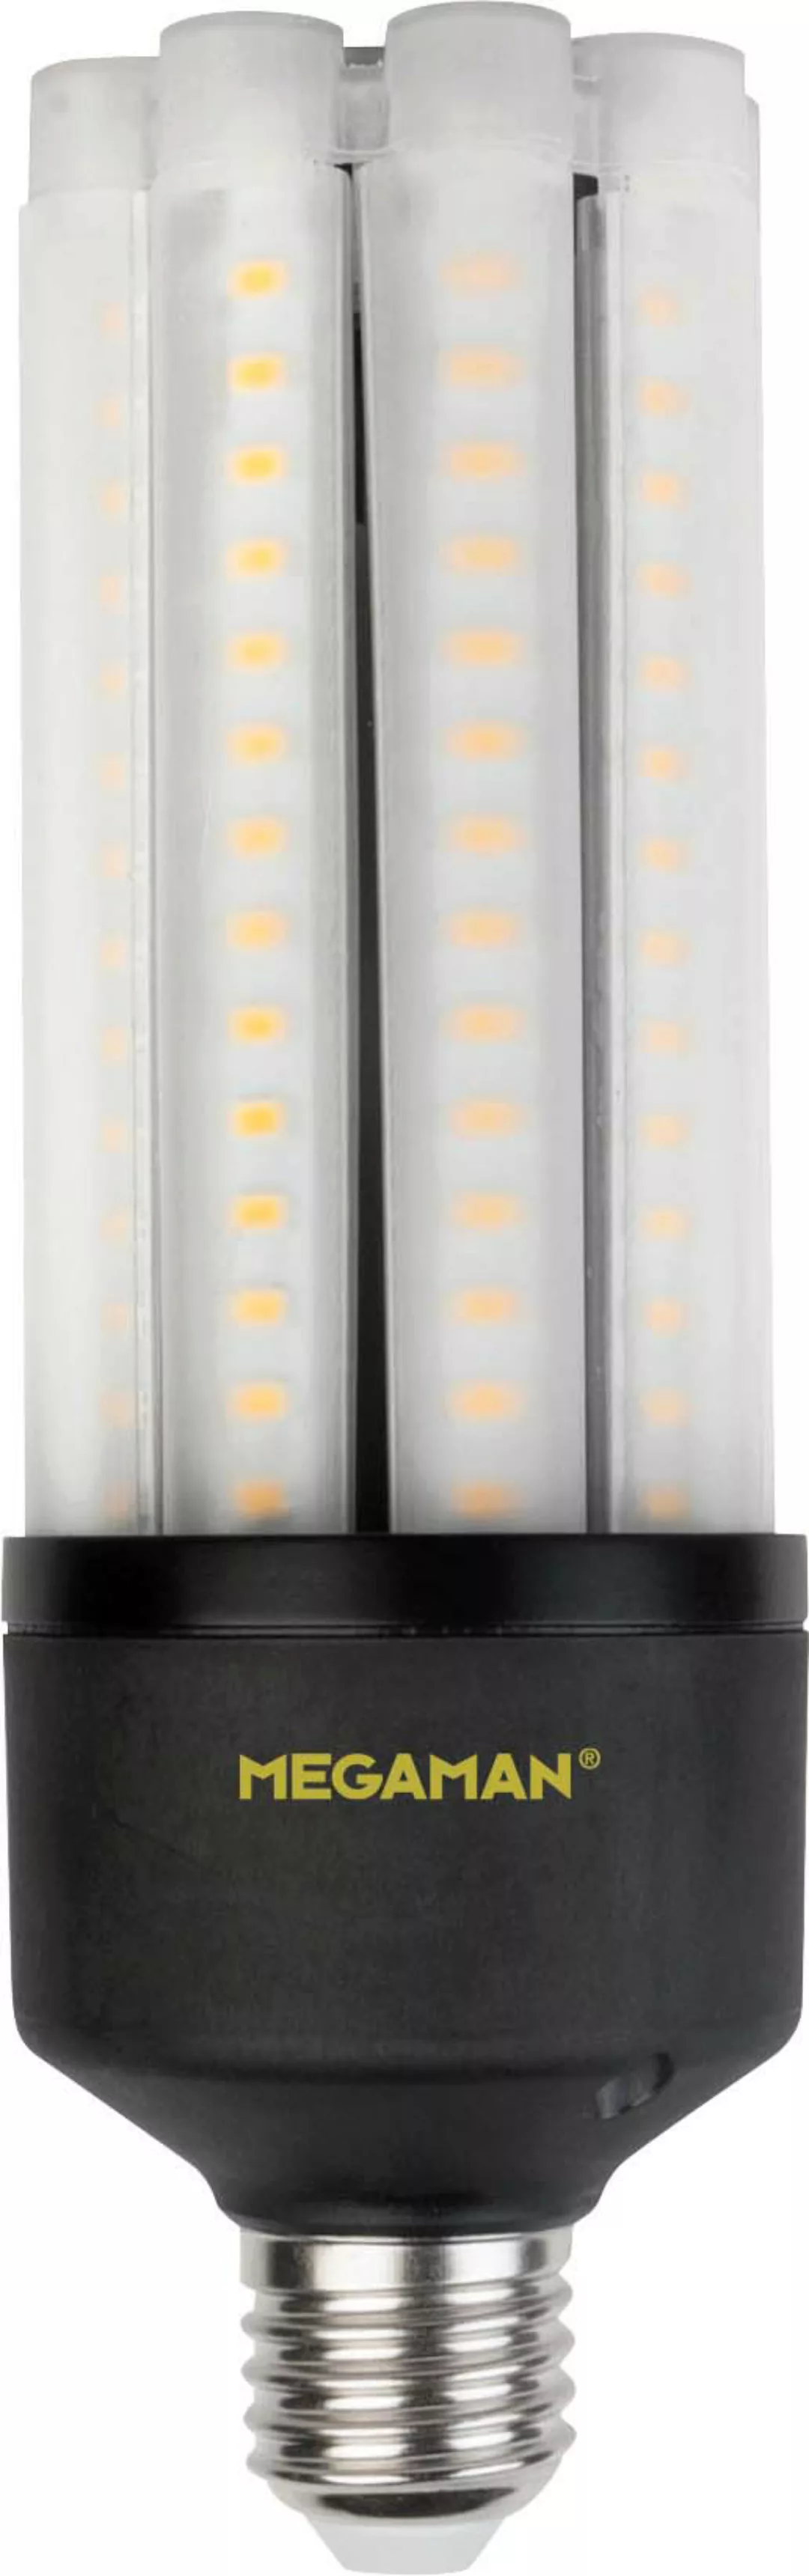 Megaman LED-Lampe E27 27W 2800lm 840 MM 60724 günstig online kaufen